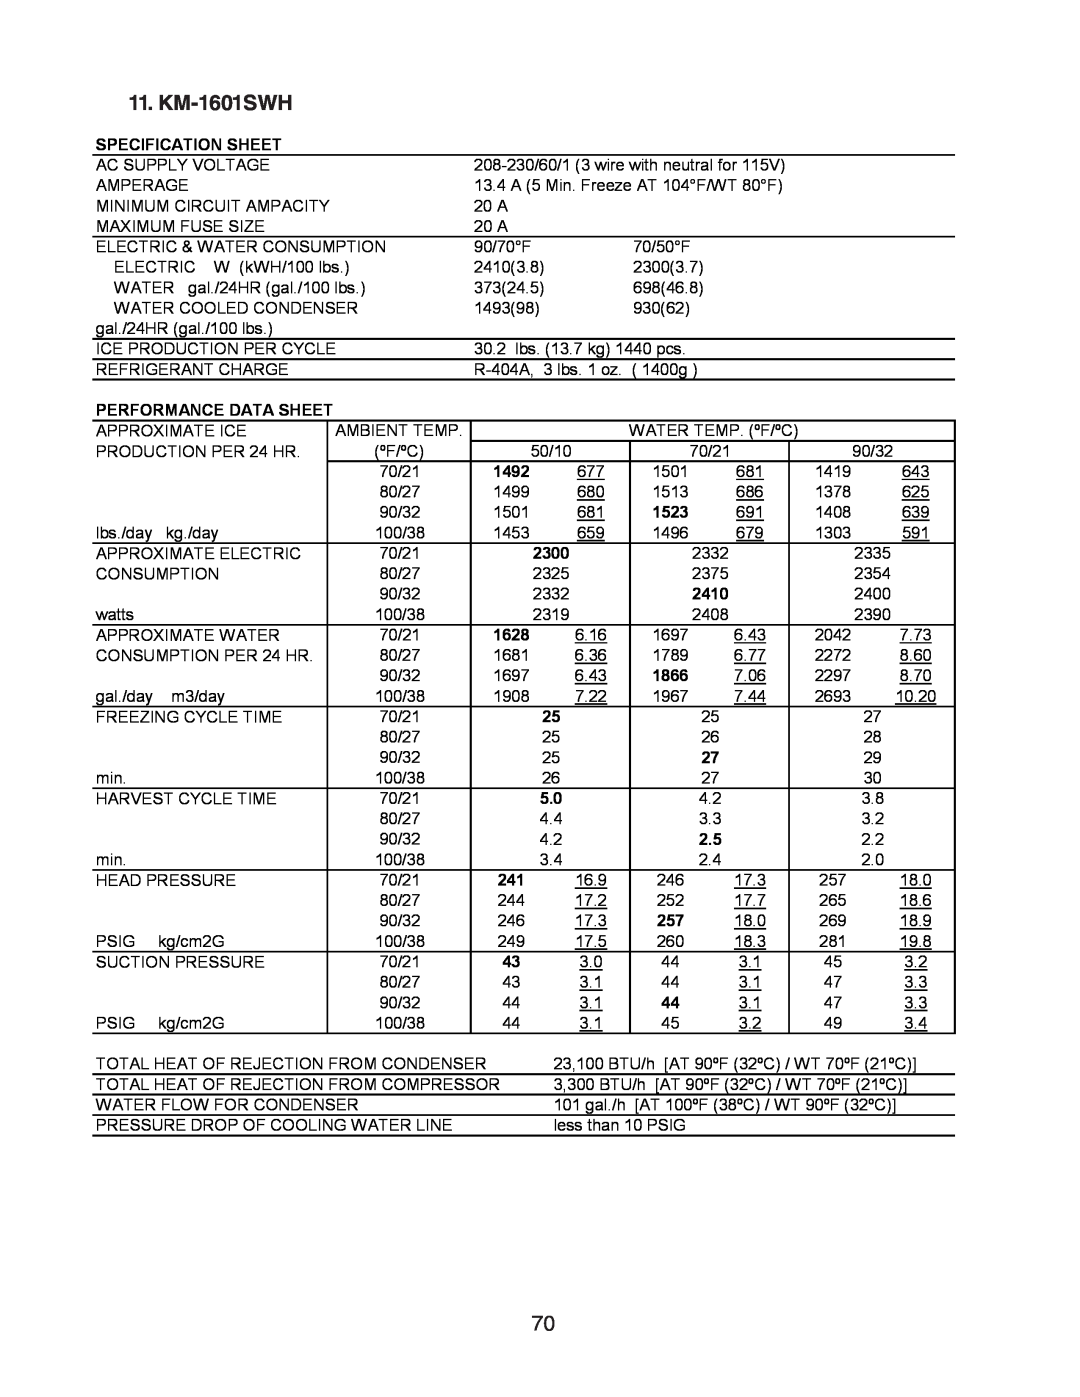 Hoshizaki SRH3 KM-2500SWH3, SRH/3 KM-2100SWH3, KM-1301SAH/3 KM-1601SWH, Specification Sheet, Performance Data Sheet 